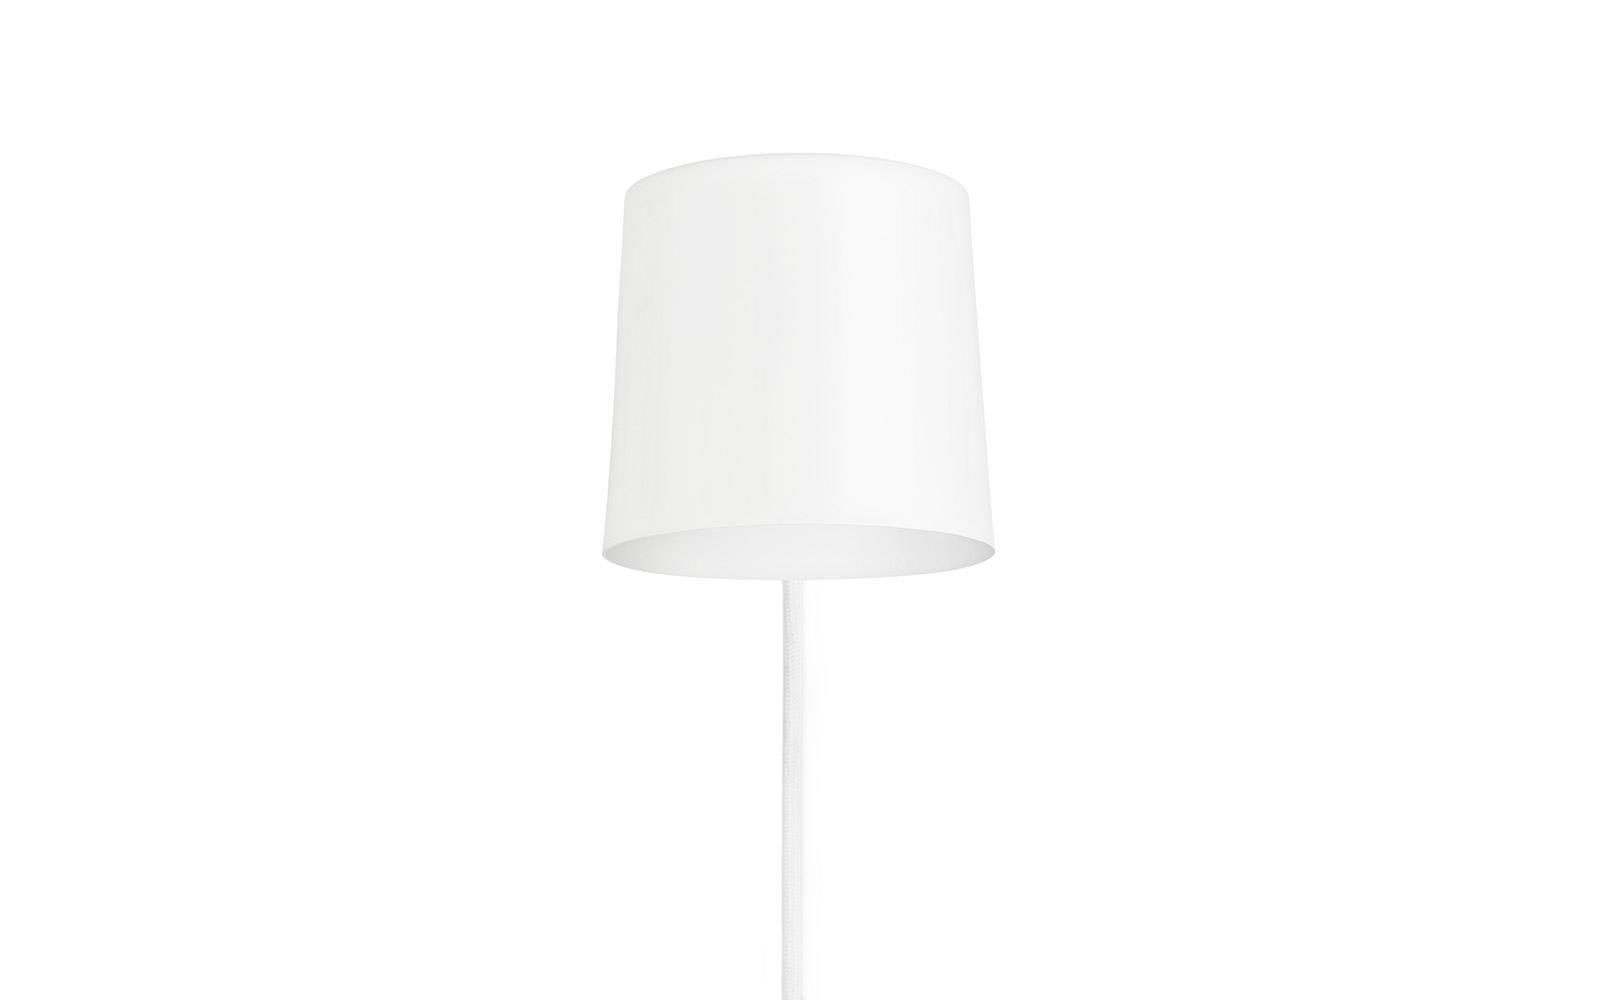 Rise lamp North American version White